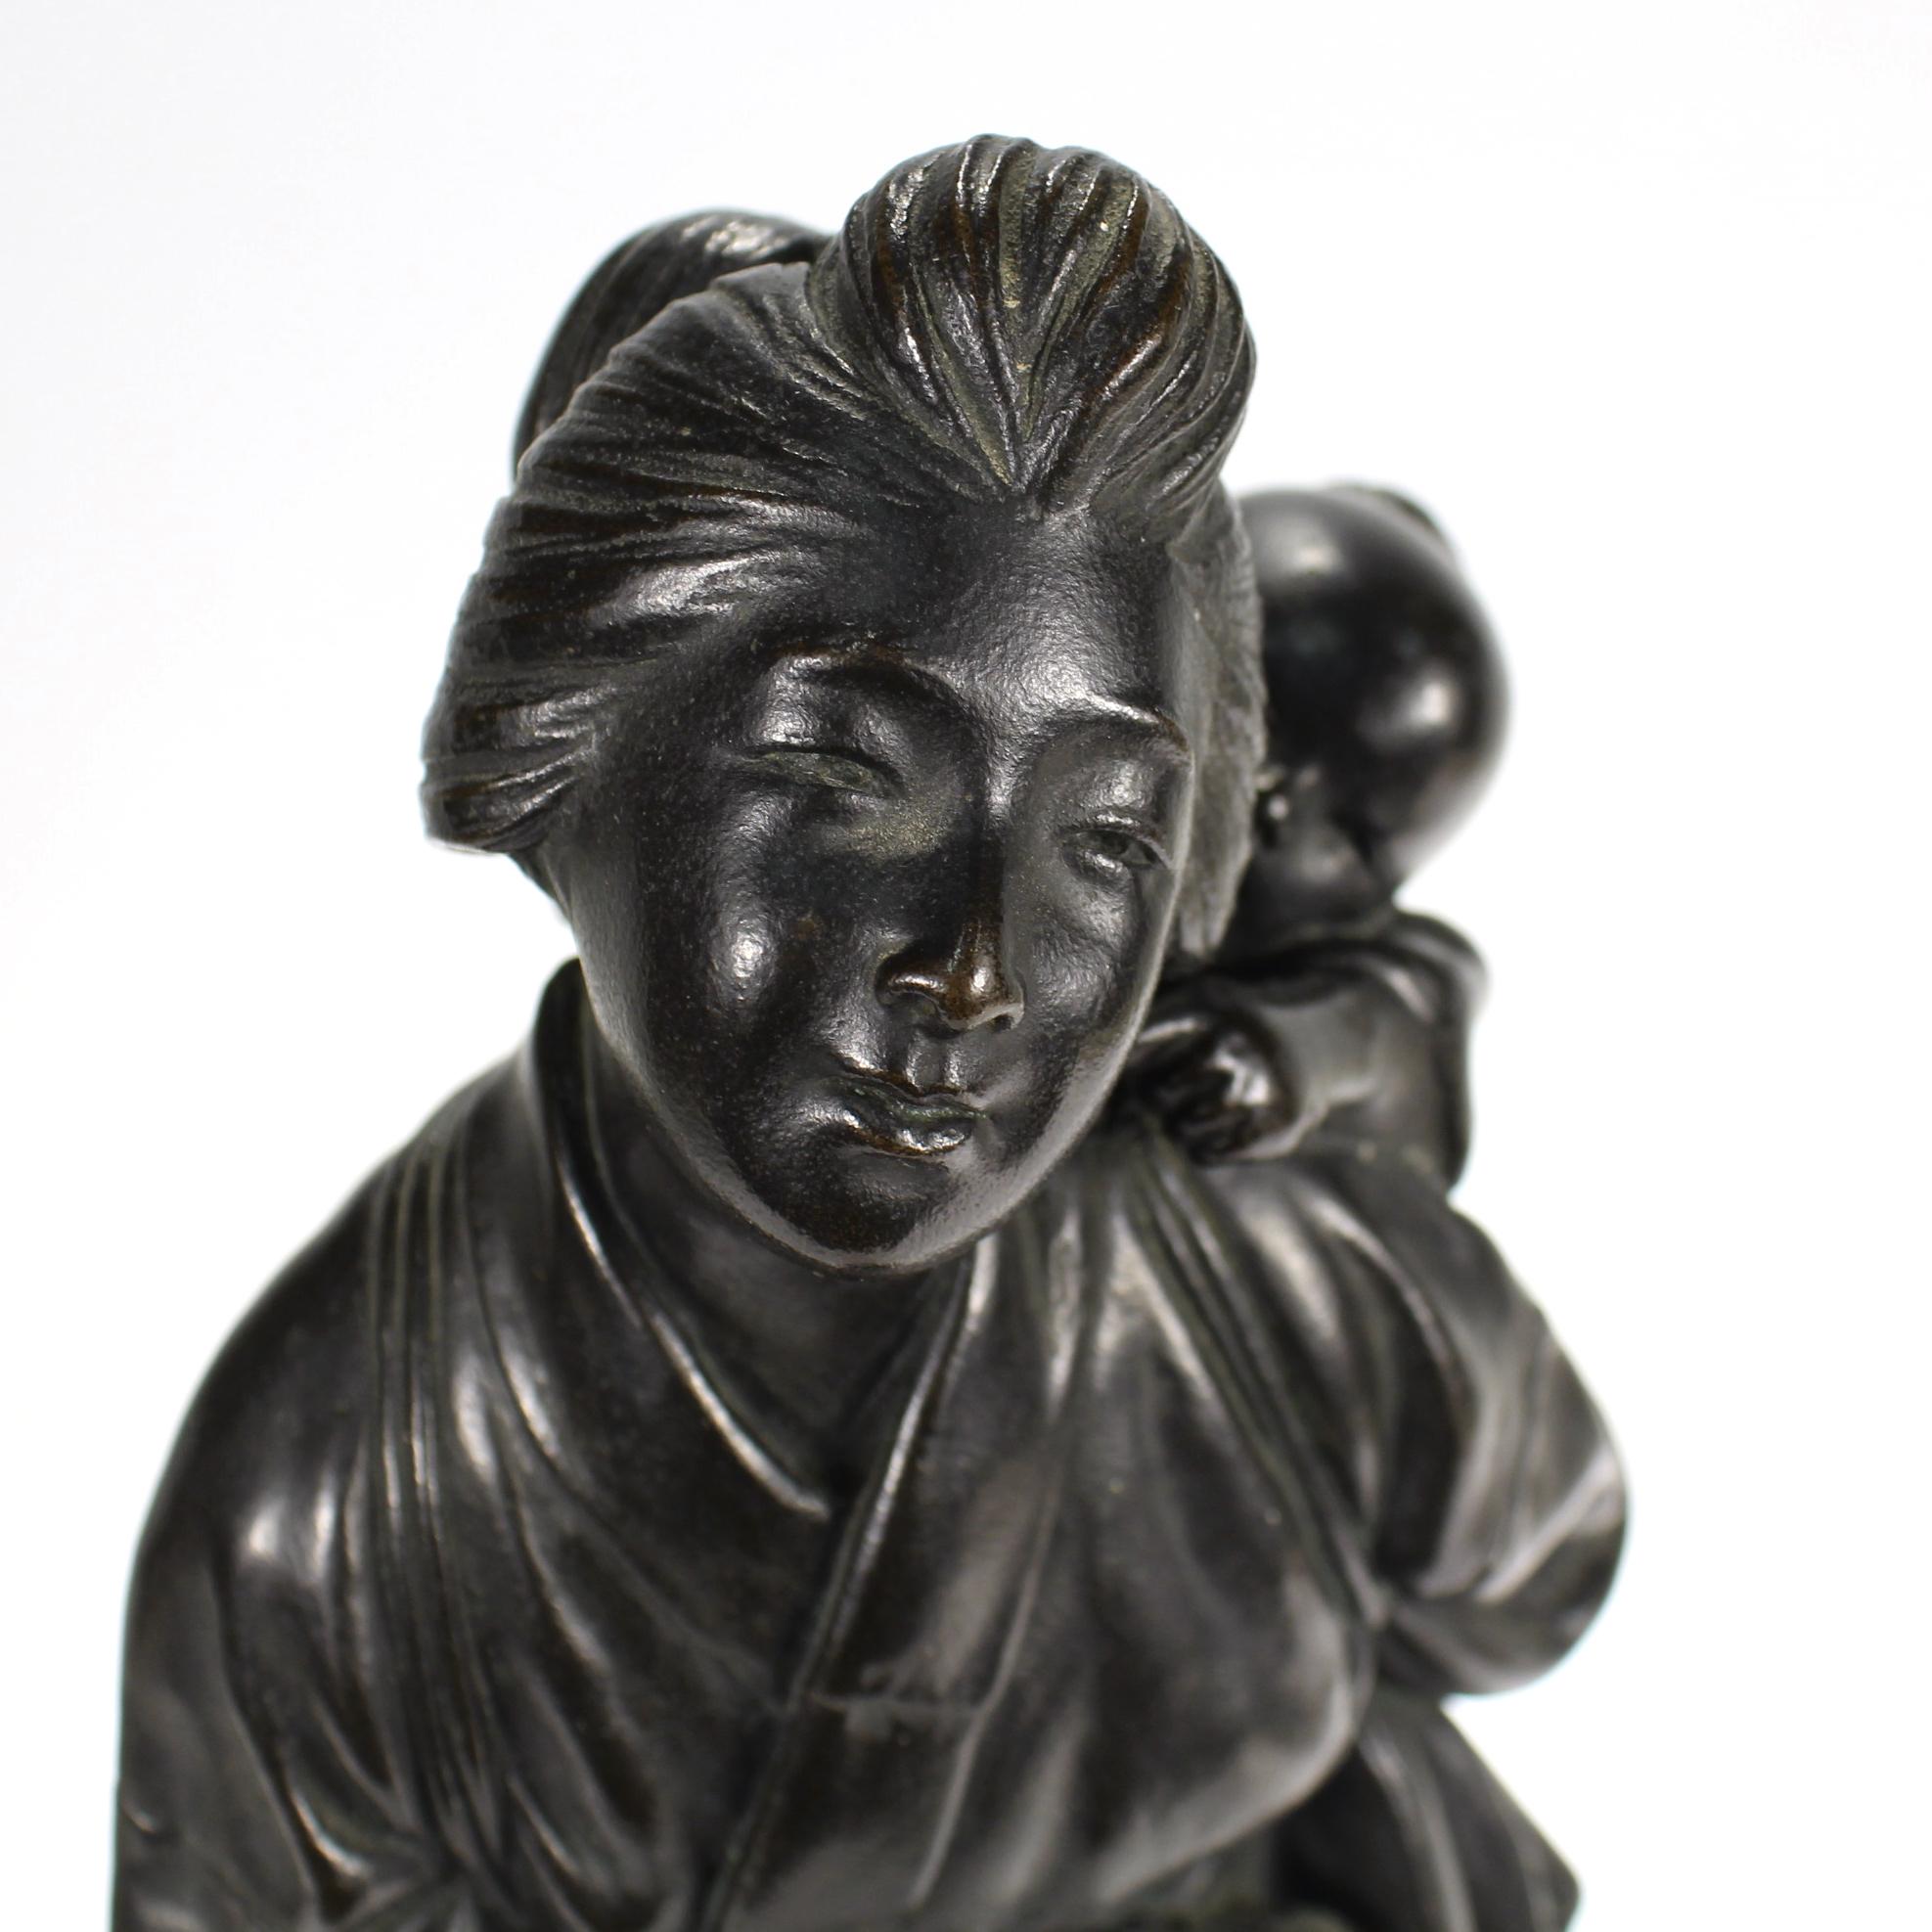 japanese bronze sculpture